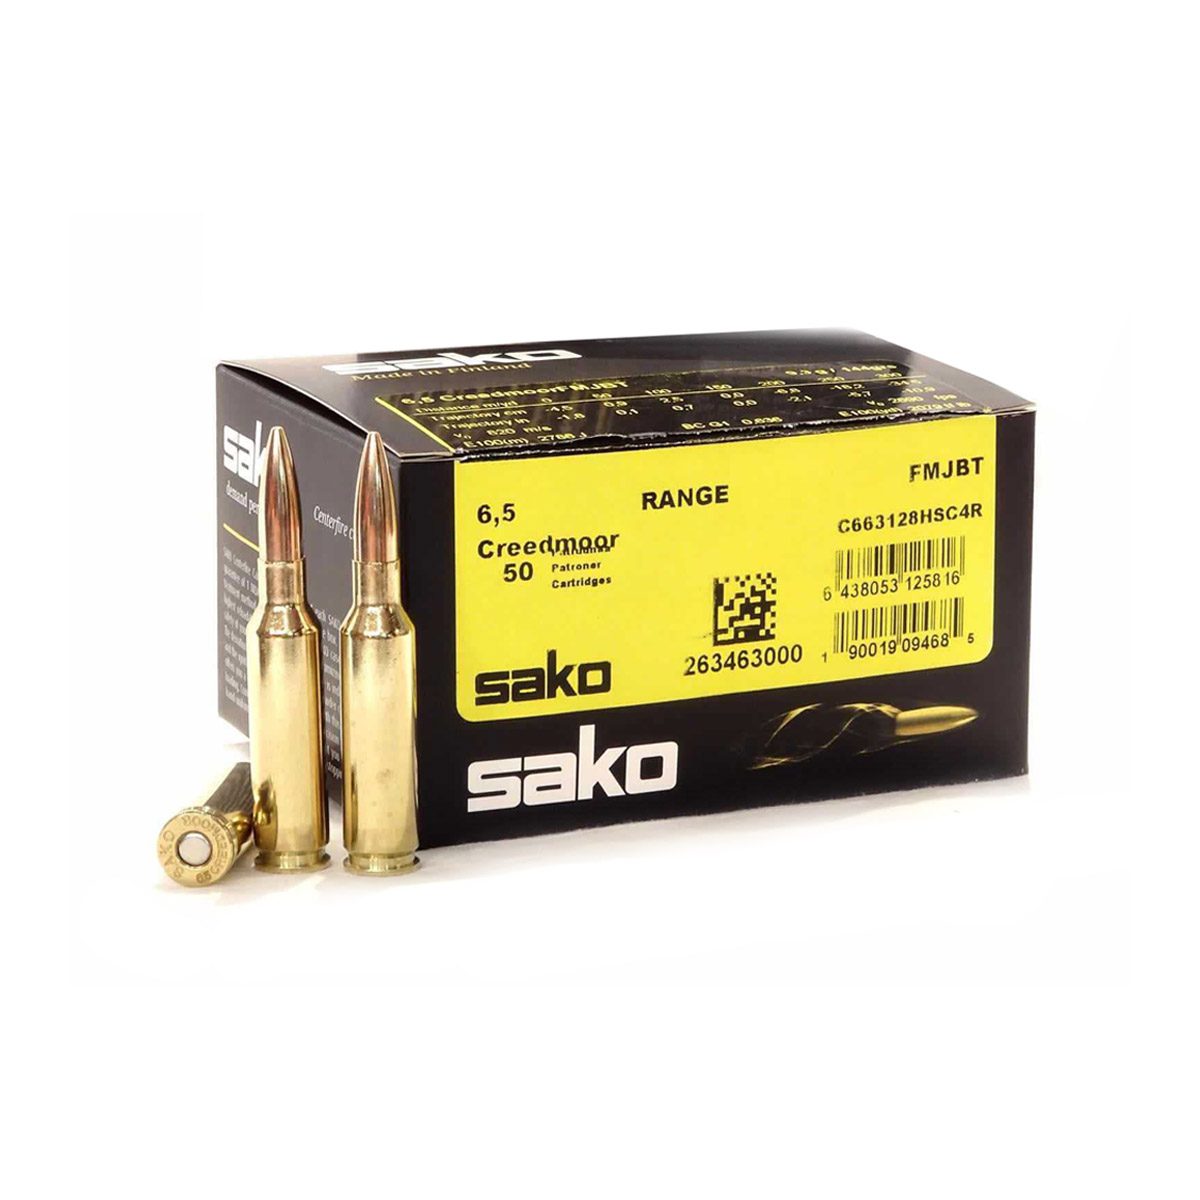 Sako Ammunition 6.5 Creedmoor Range 144 Gr. – 50 Rounds